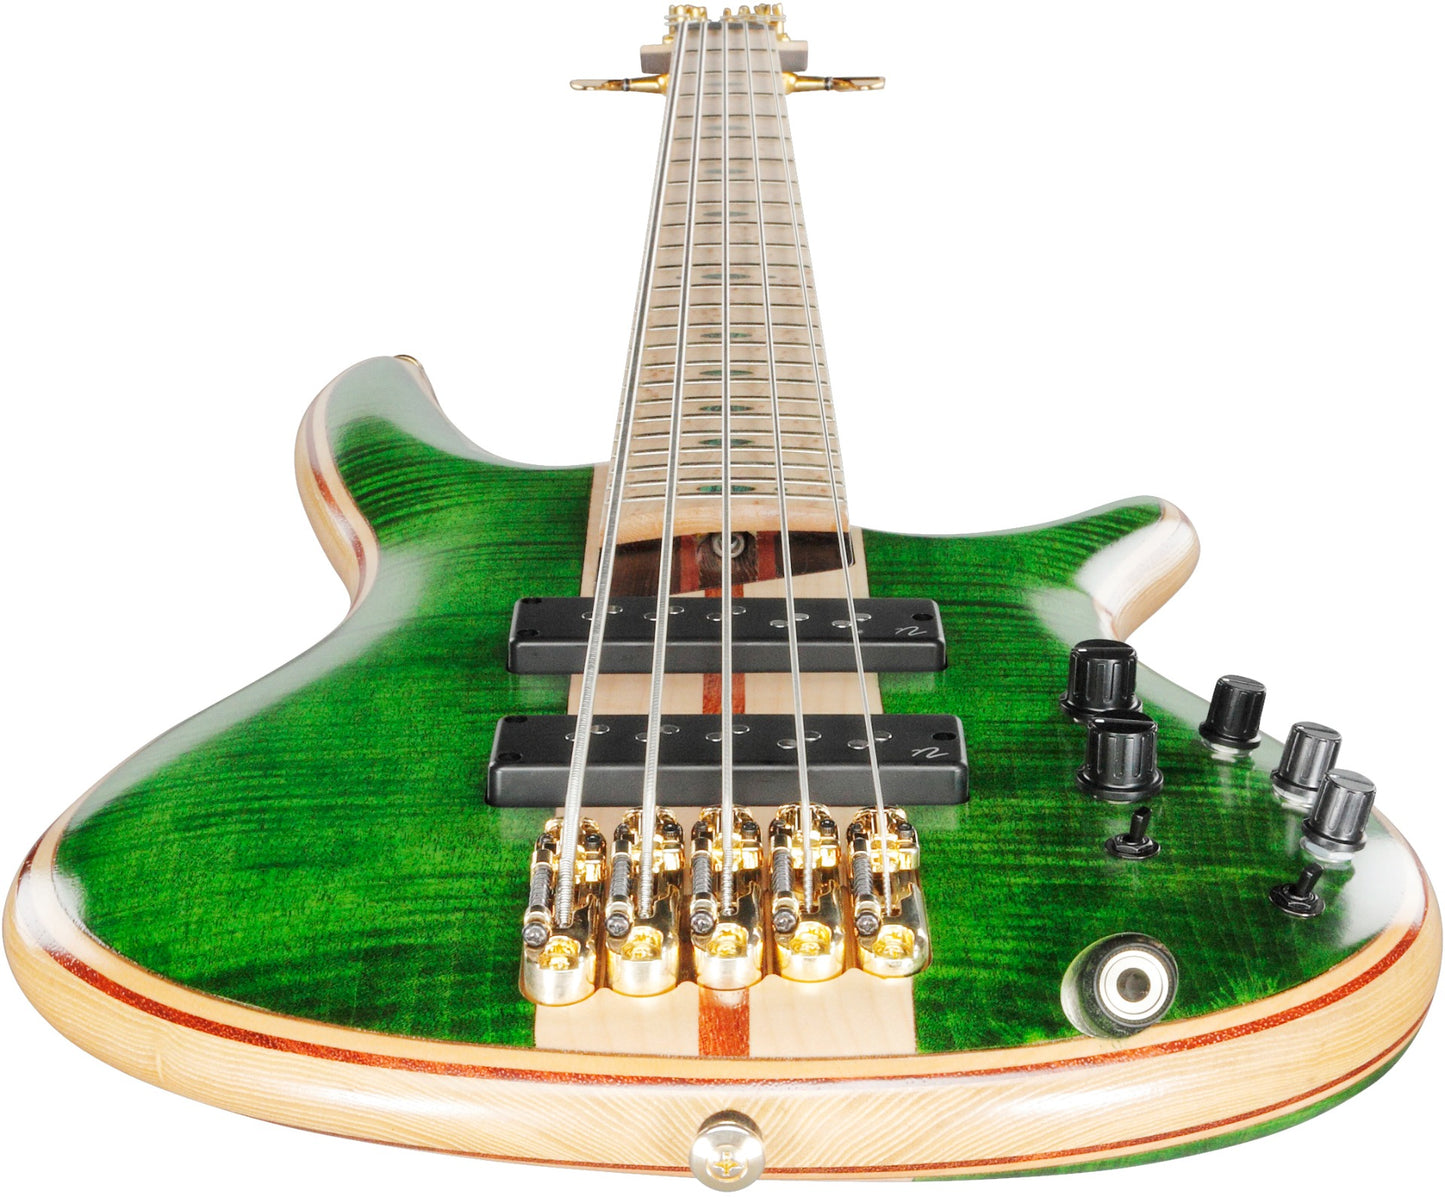 Ibanez SR5FMDXEGL SR Premium 5-Str Electric Bass w/Bag - Emerald Green Low Gloss